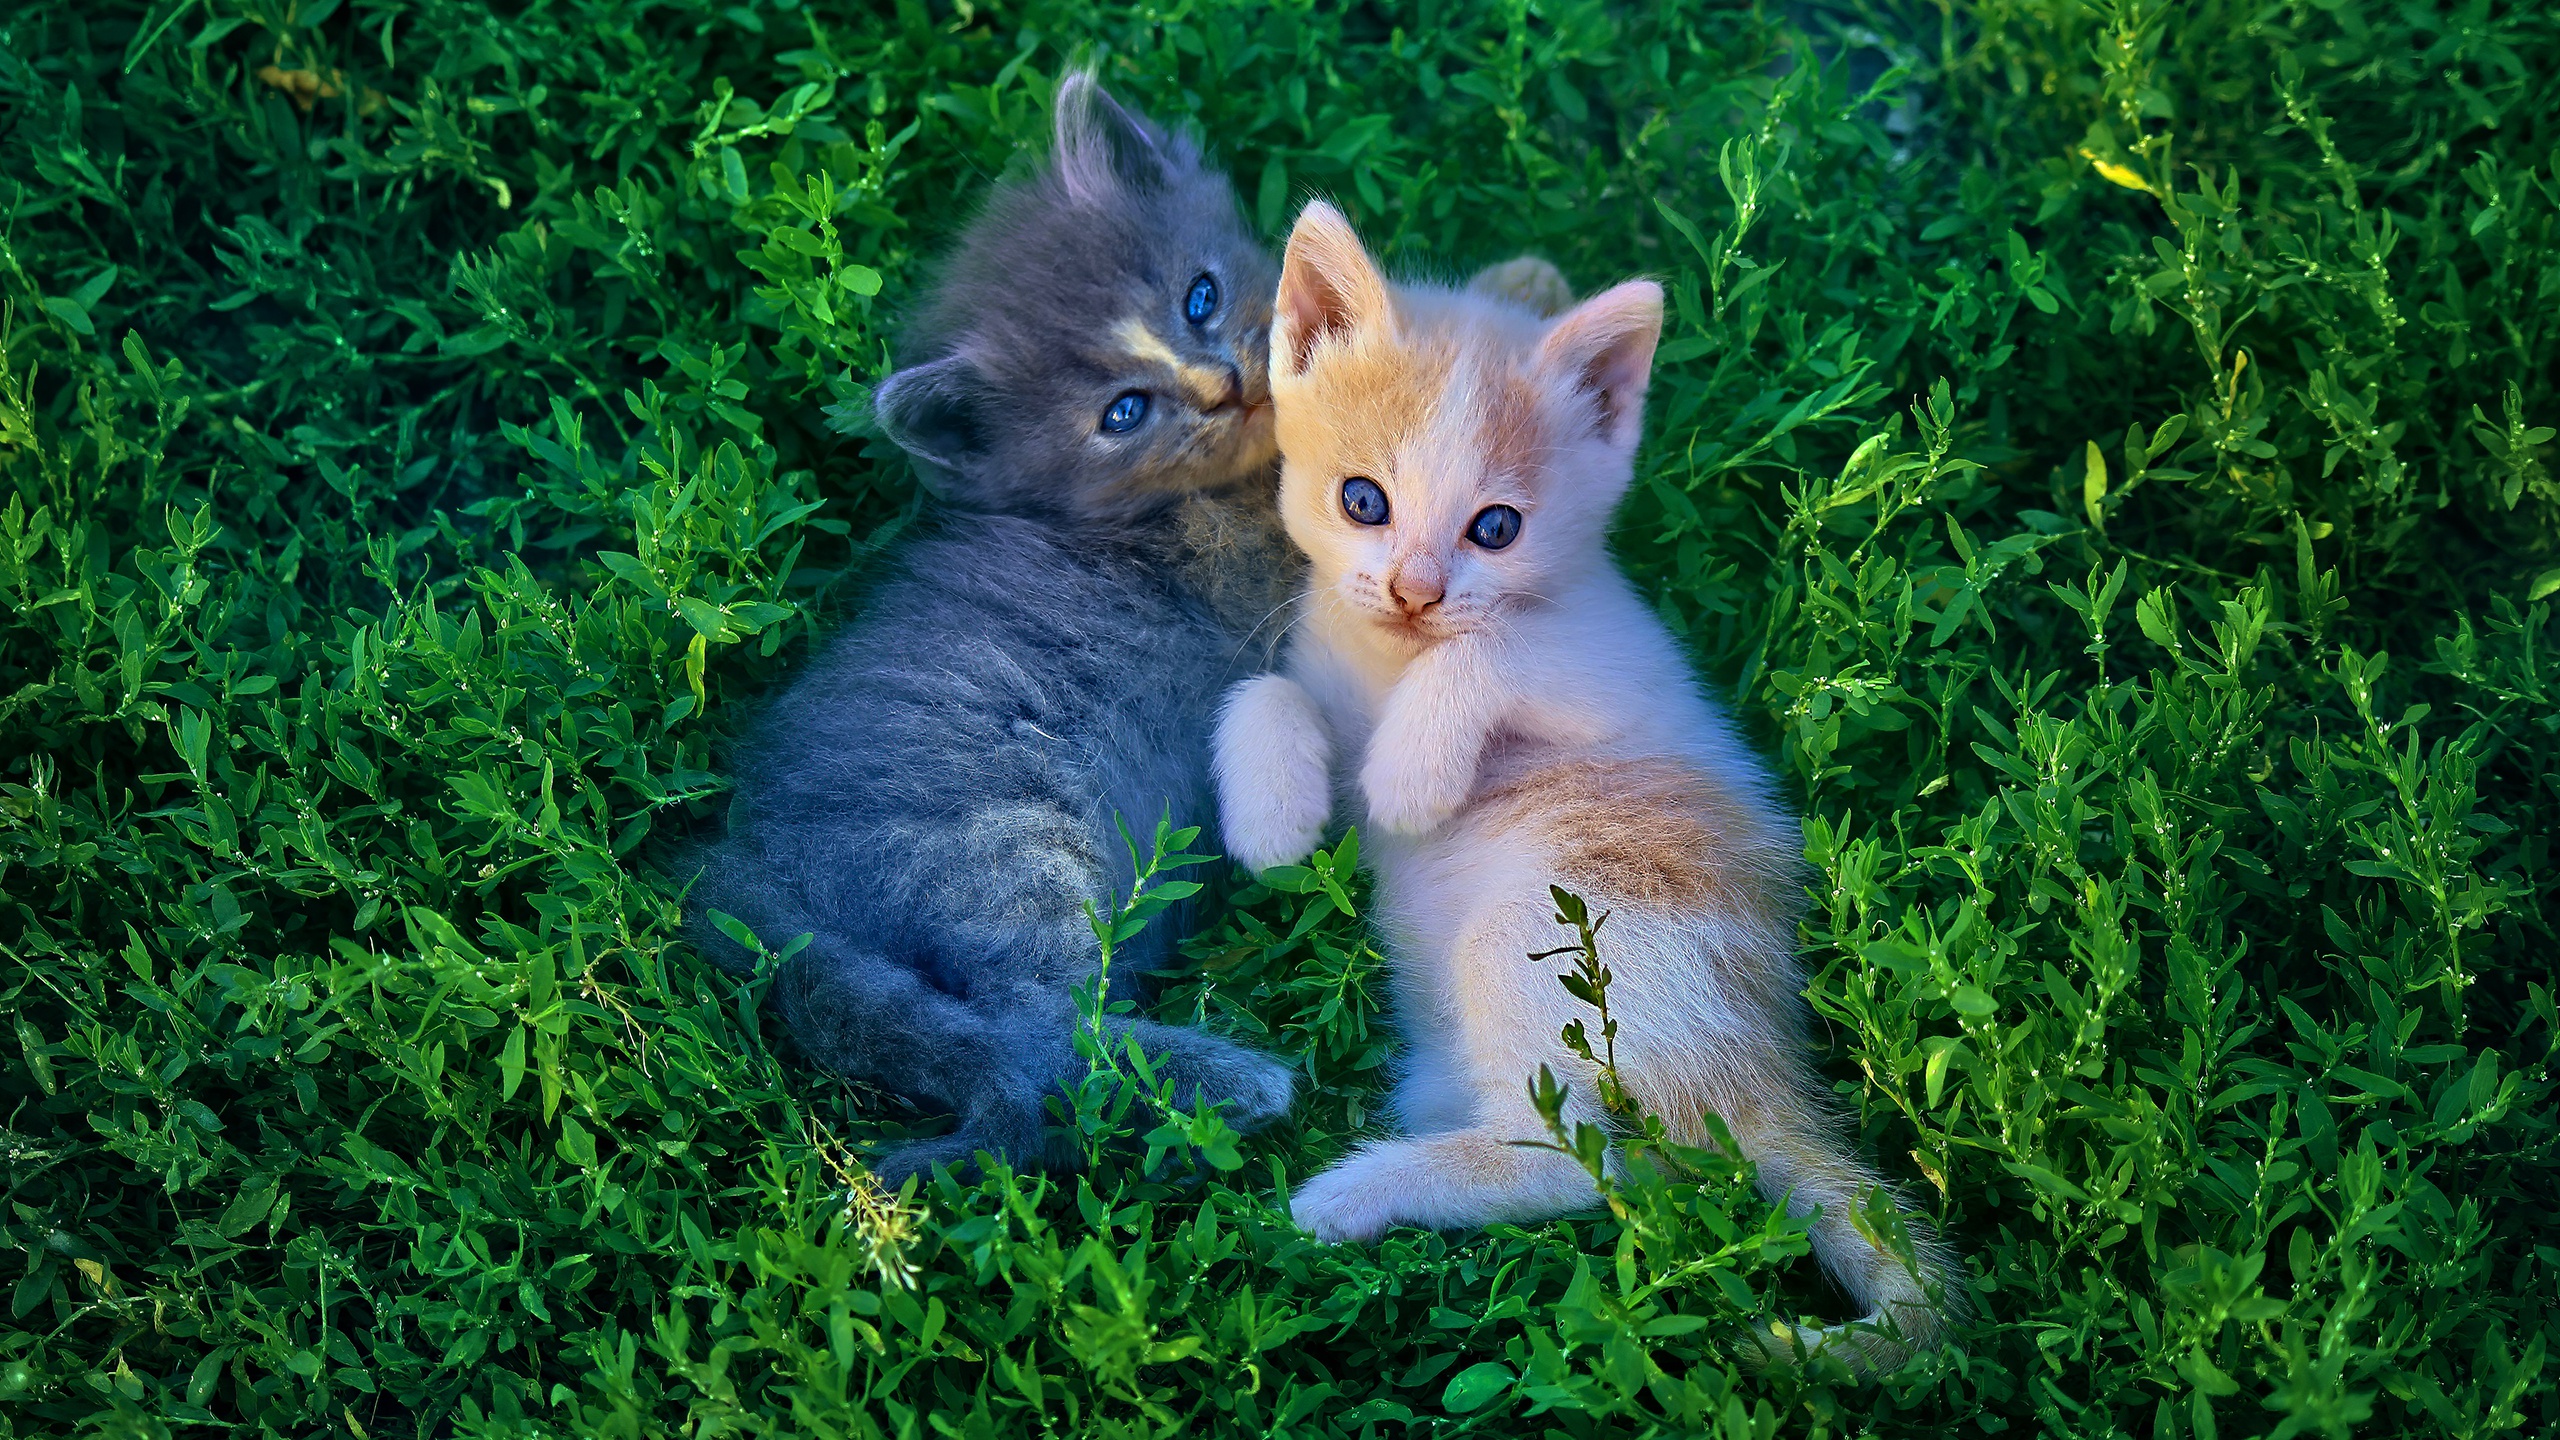 Baby Animal Cat Grass Kitten Pet 2560x1440